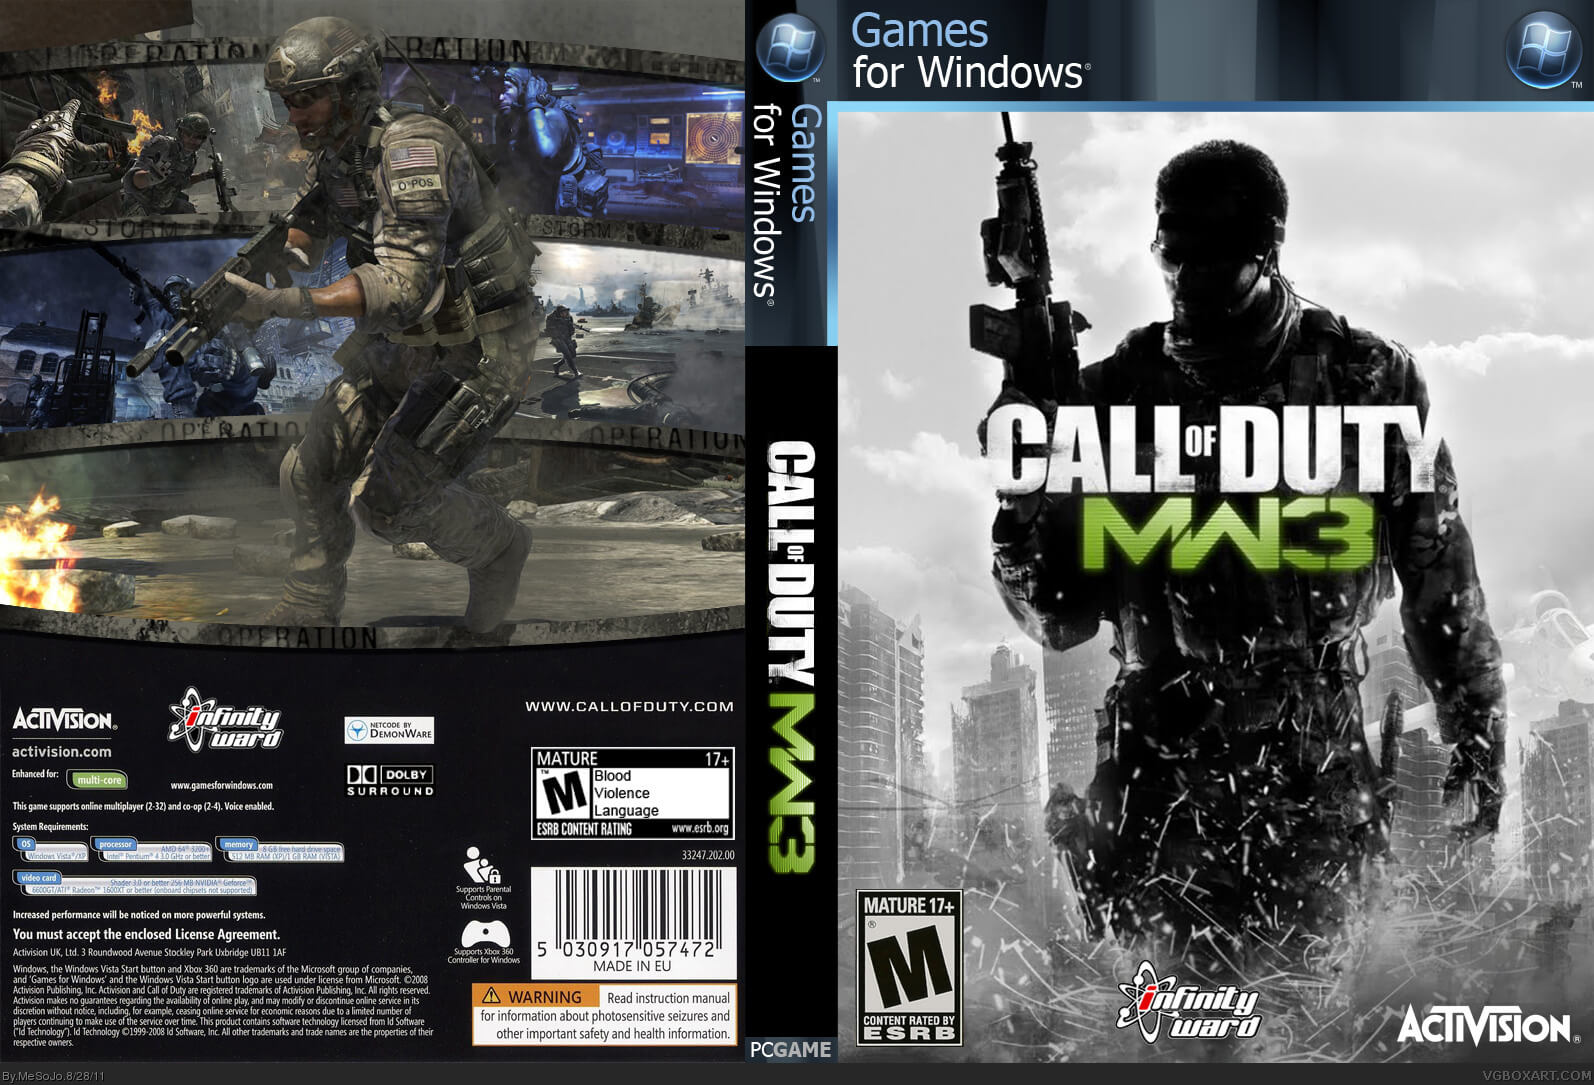 Call of duty modern warfare 3 free online game